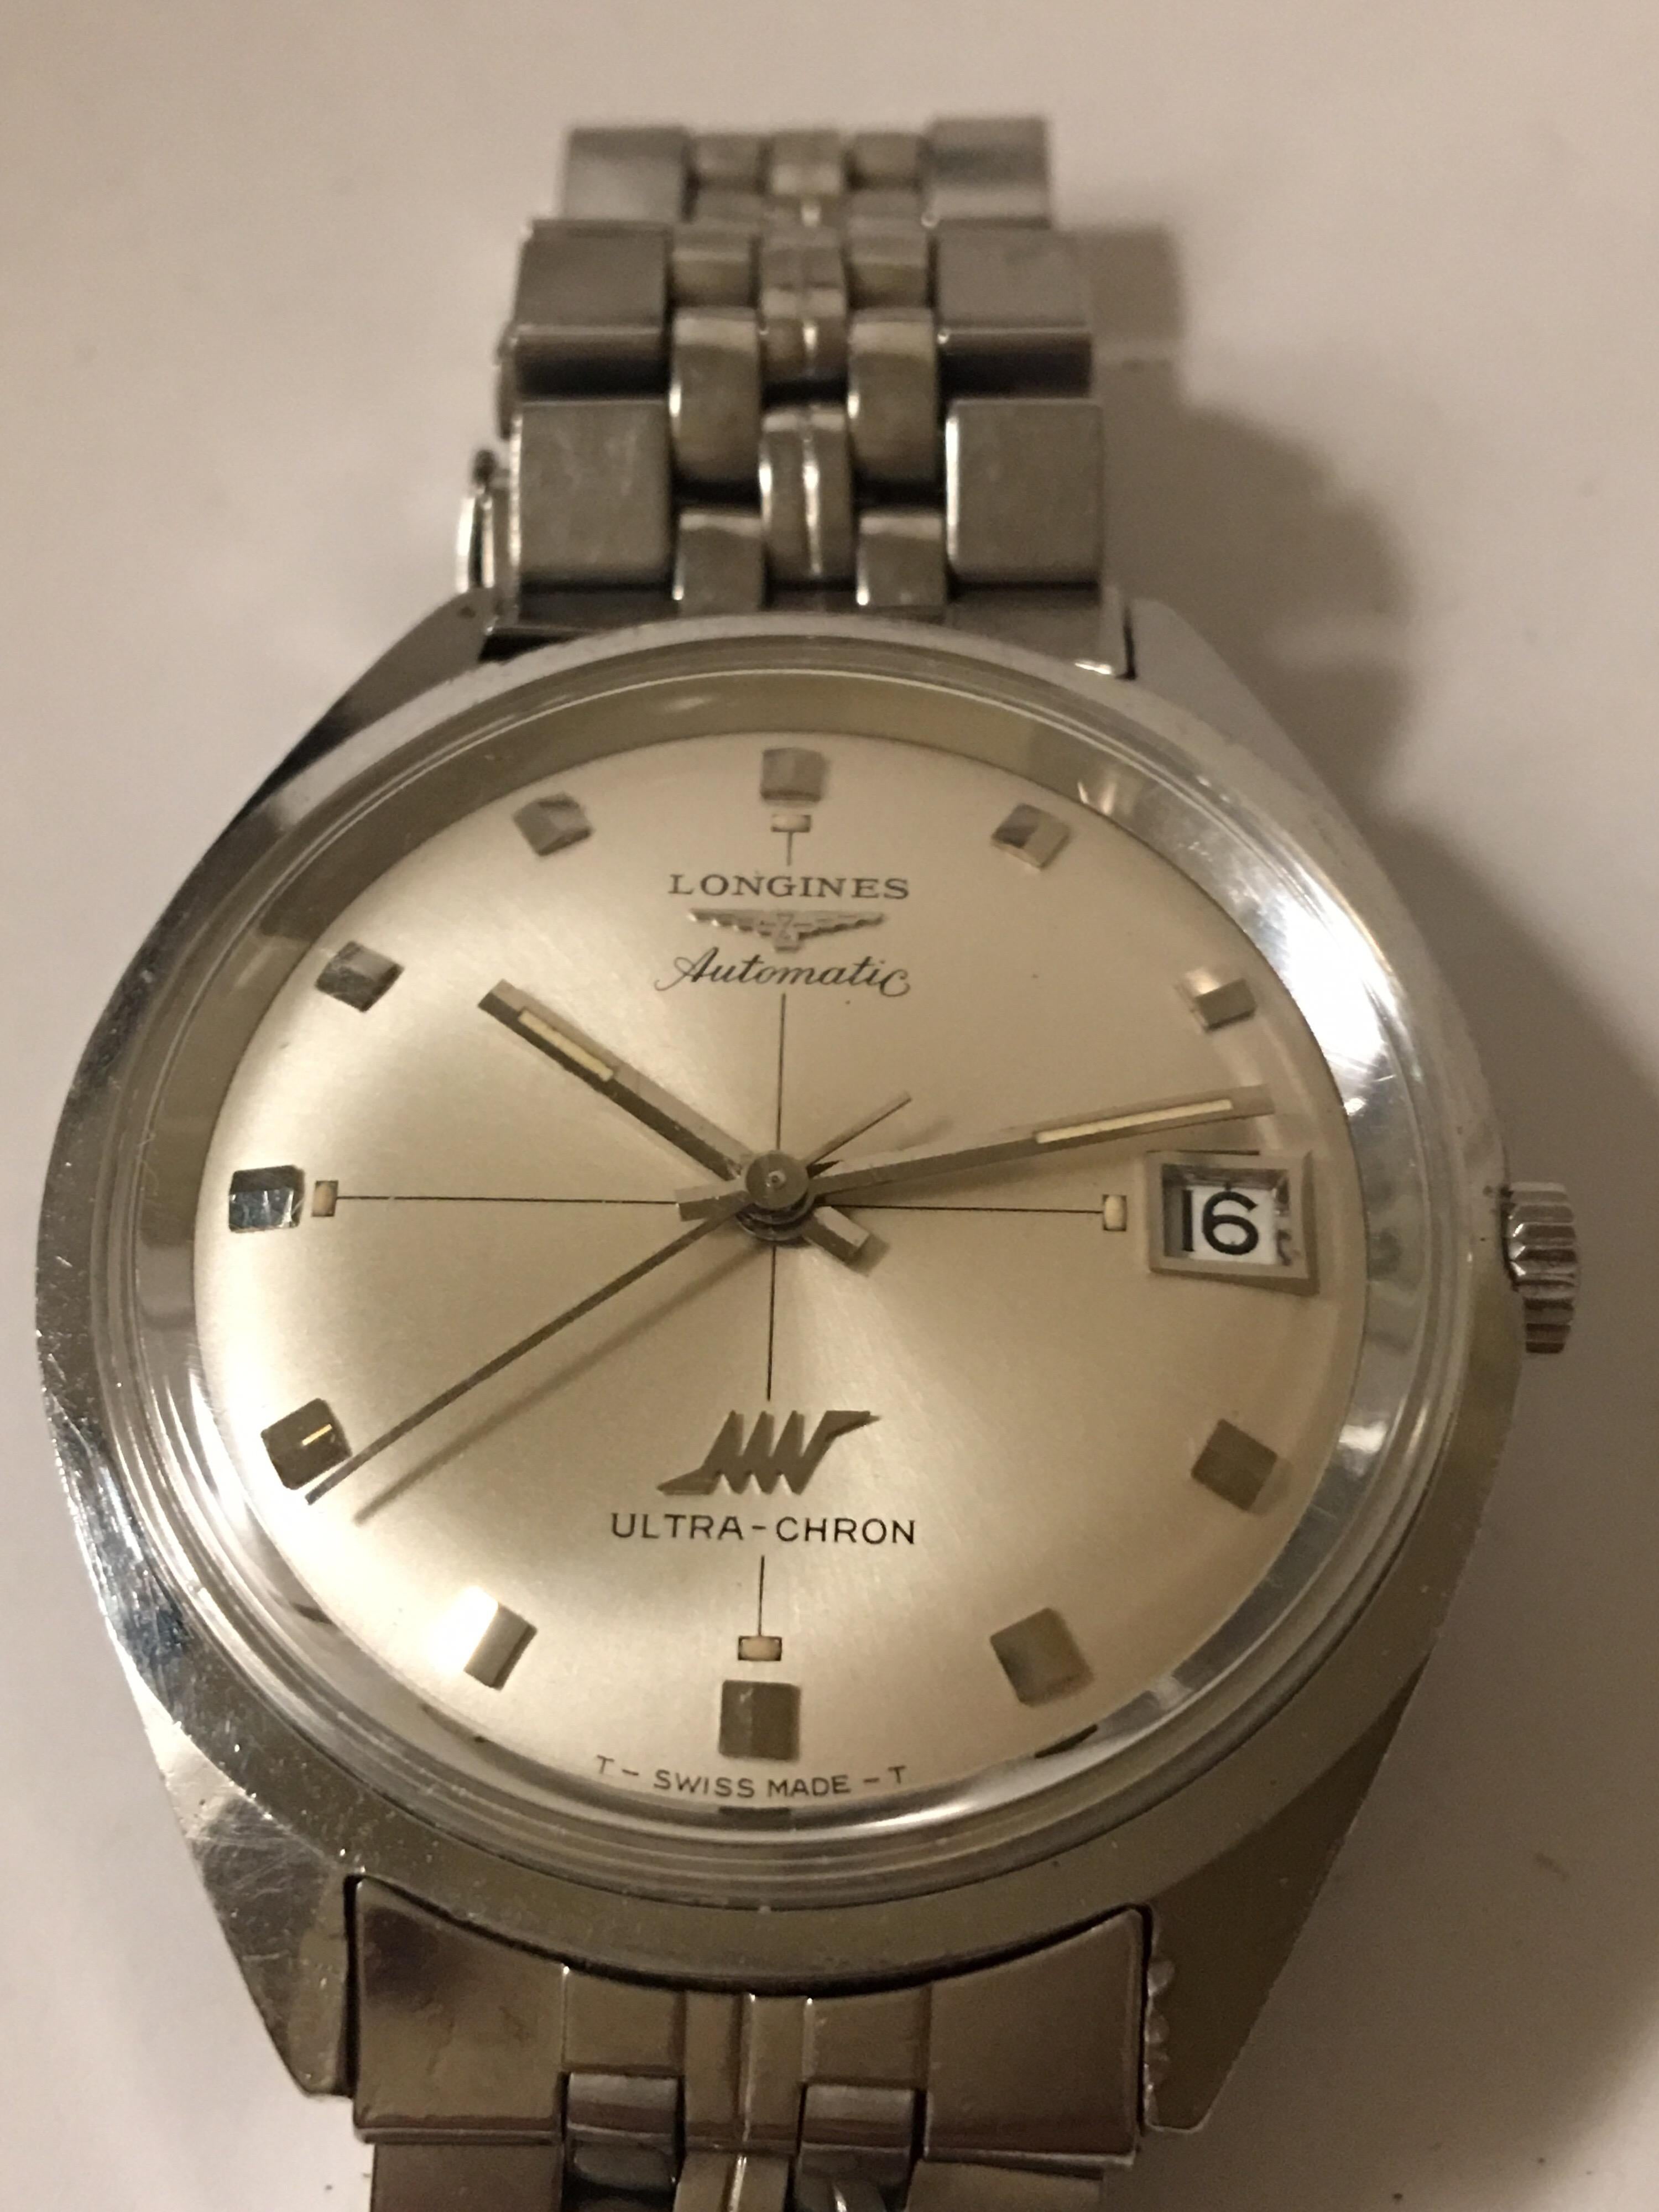 Vintage 1970s Longines Automatic Ultra-Chron Wristwatch For Sale 1